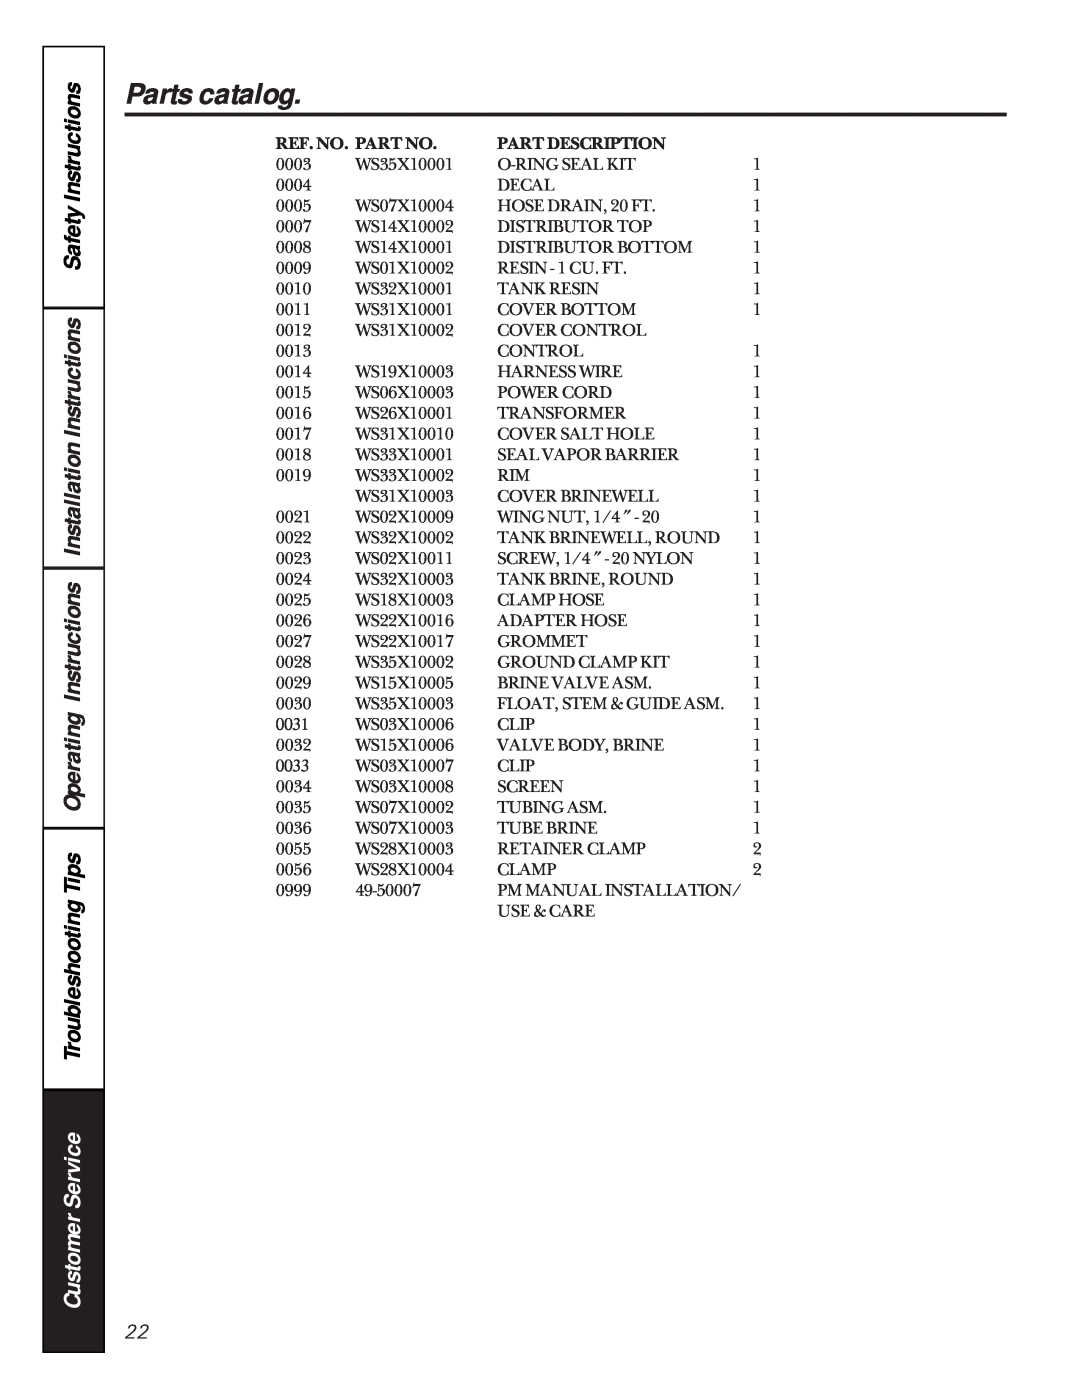 GE 6000A owner manual Parts catalog 